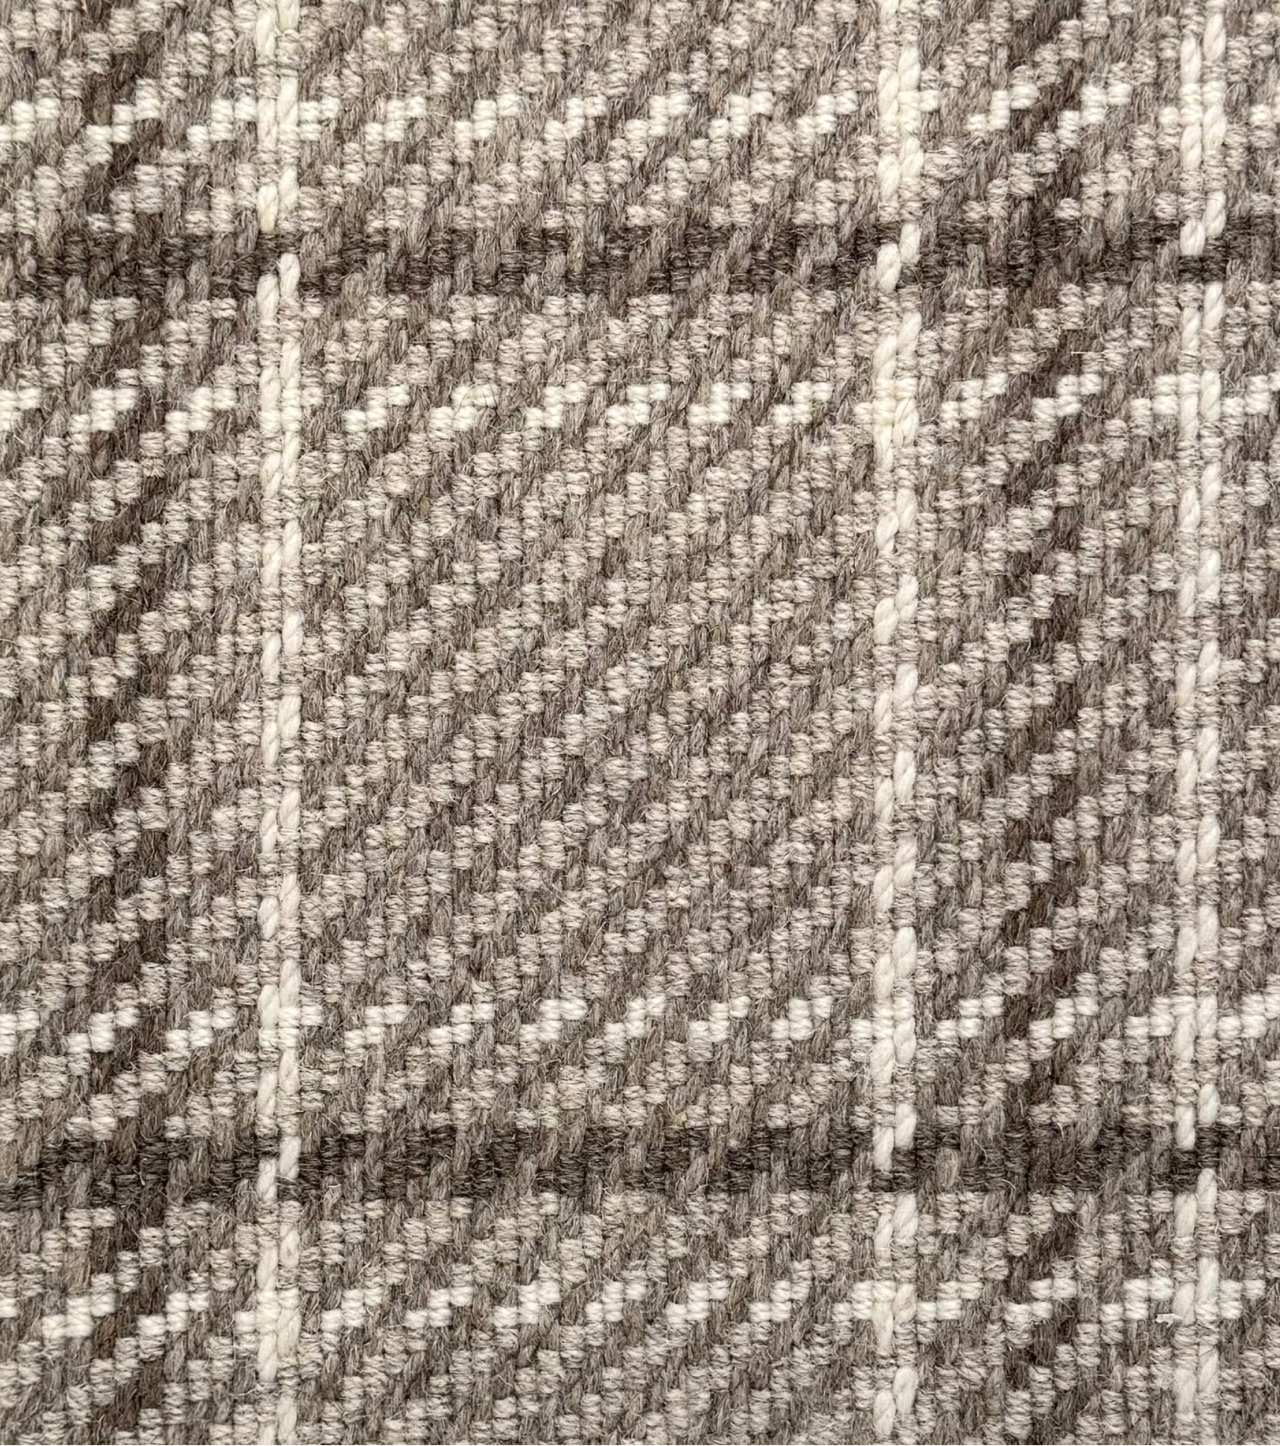 Lodge - Hand Loomed Carpet or Rug